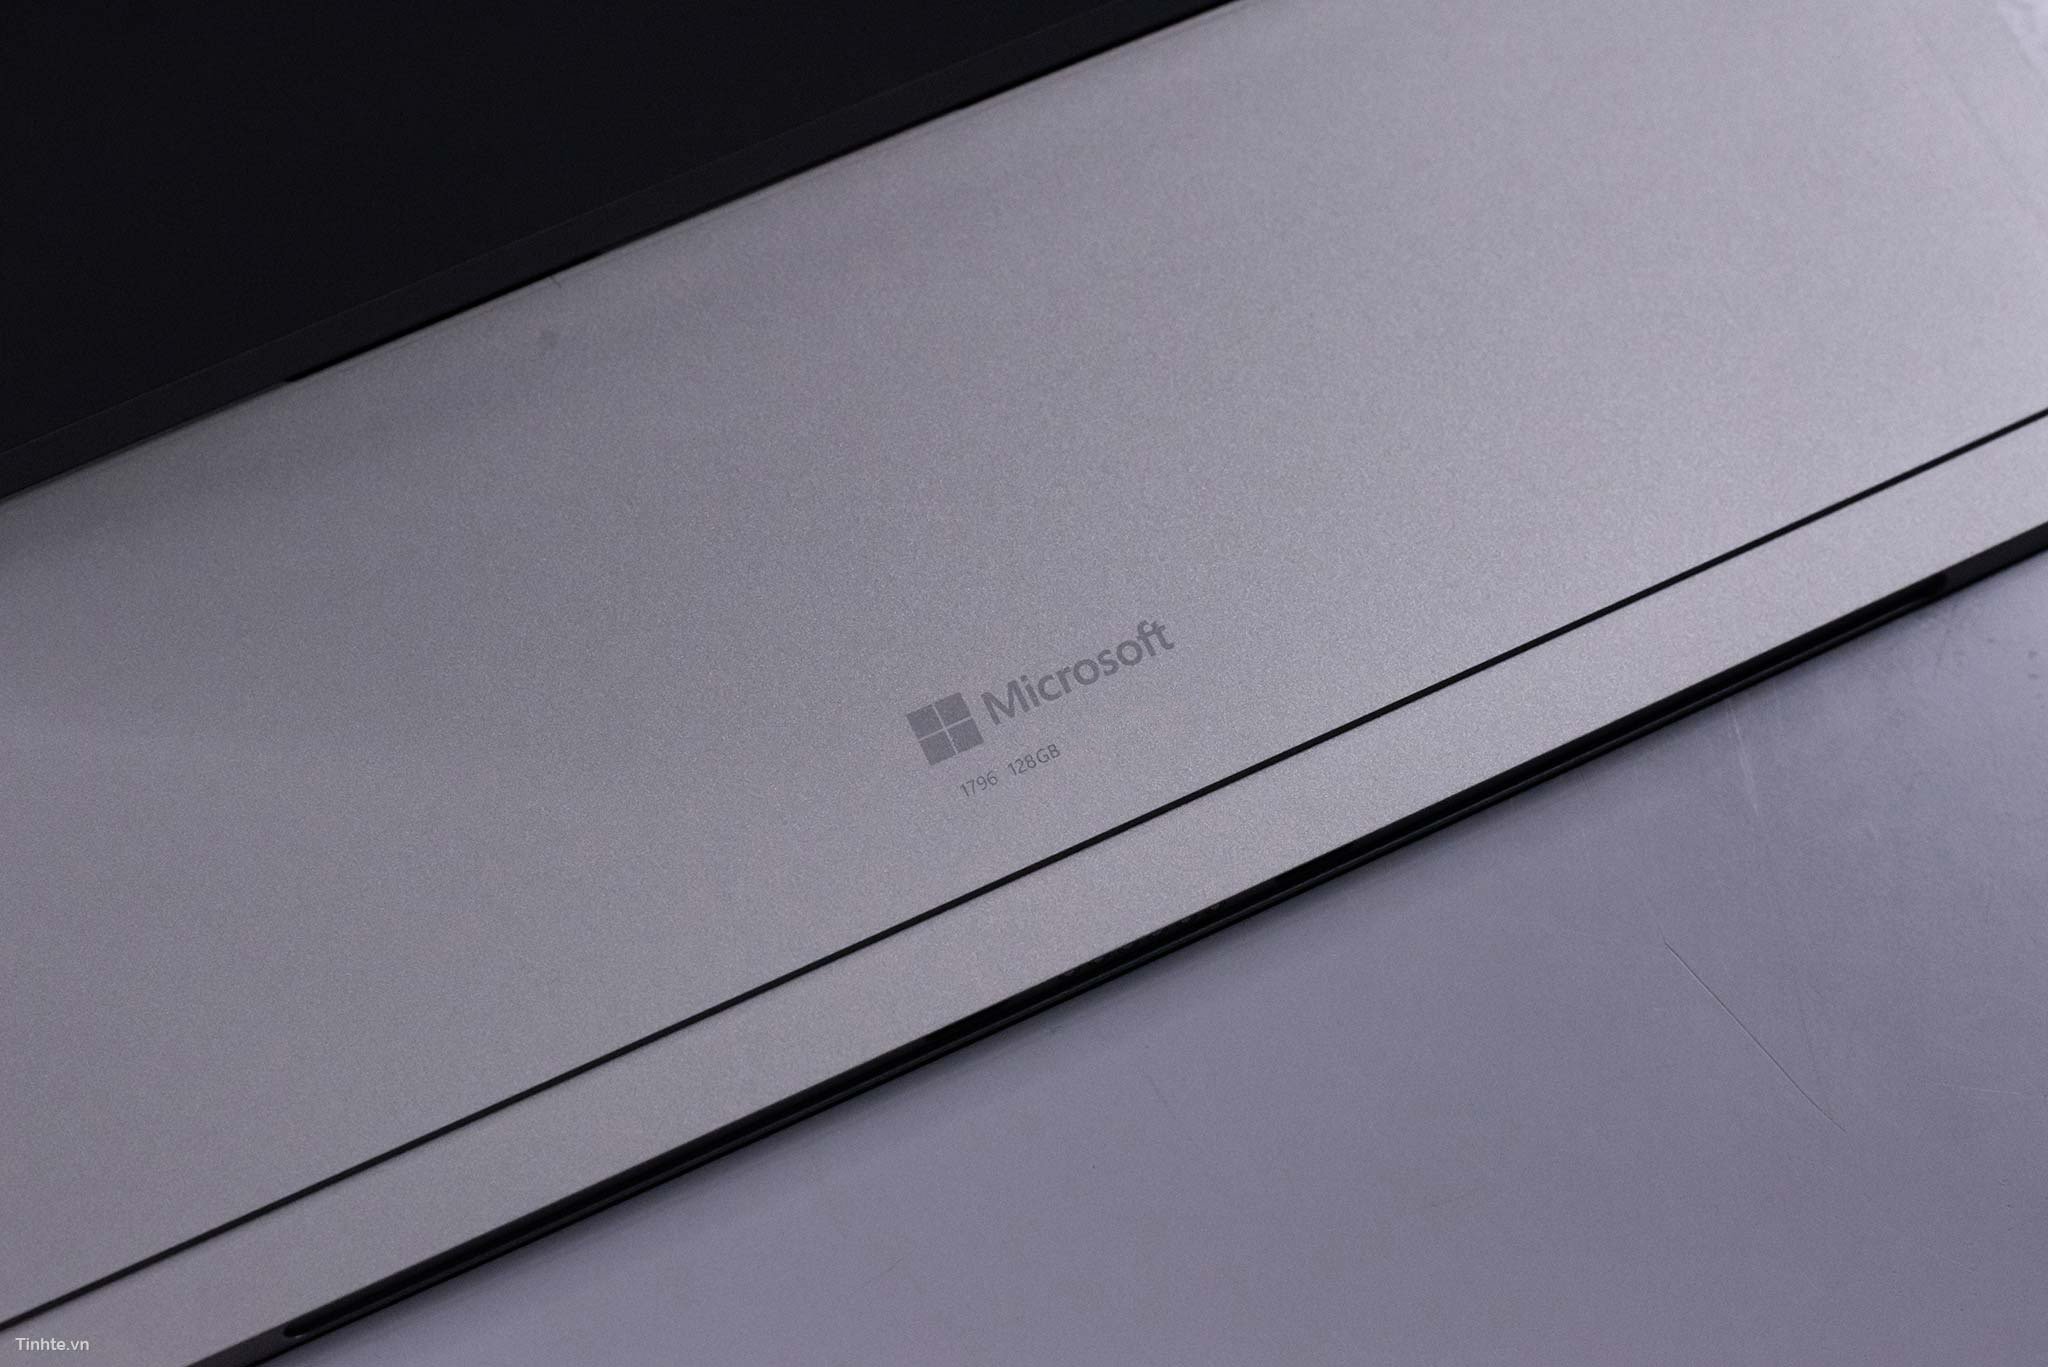 Microsoft Surface Pro 6 Leaks